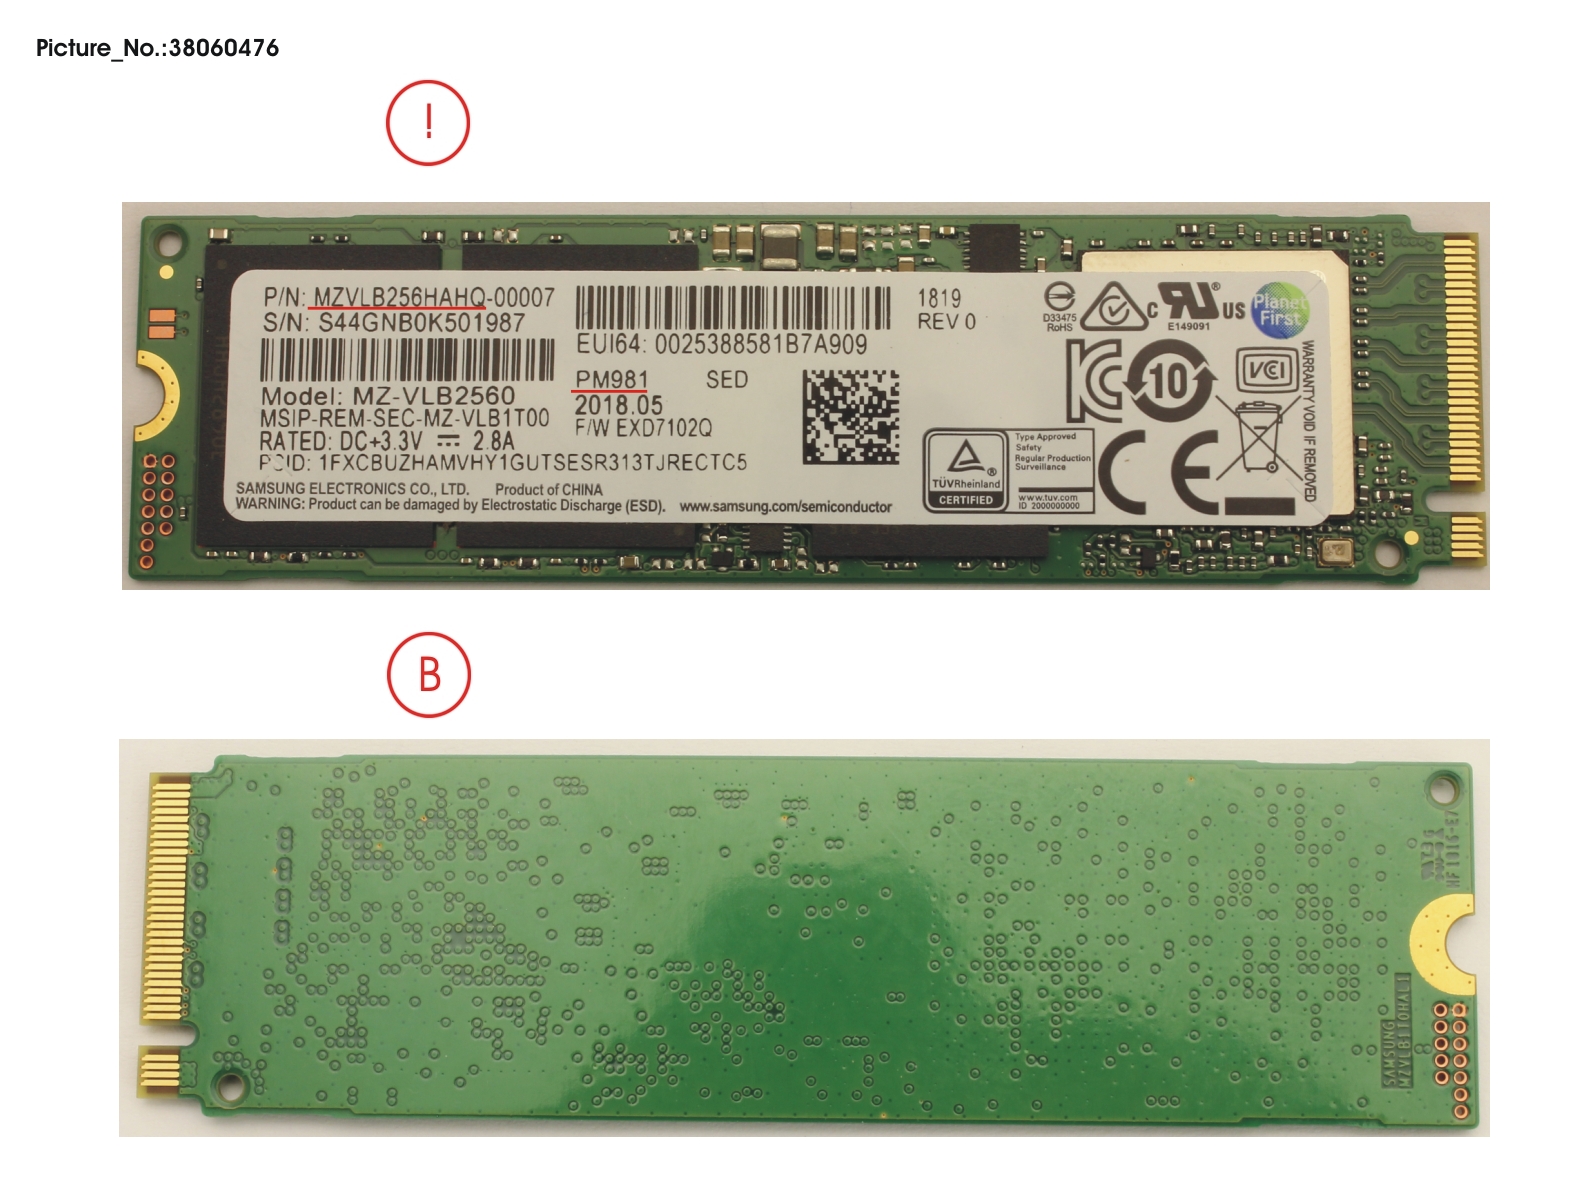 SSD PCIE M.2 2280 256GB PM981 (OPAL)